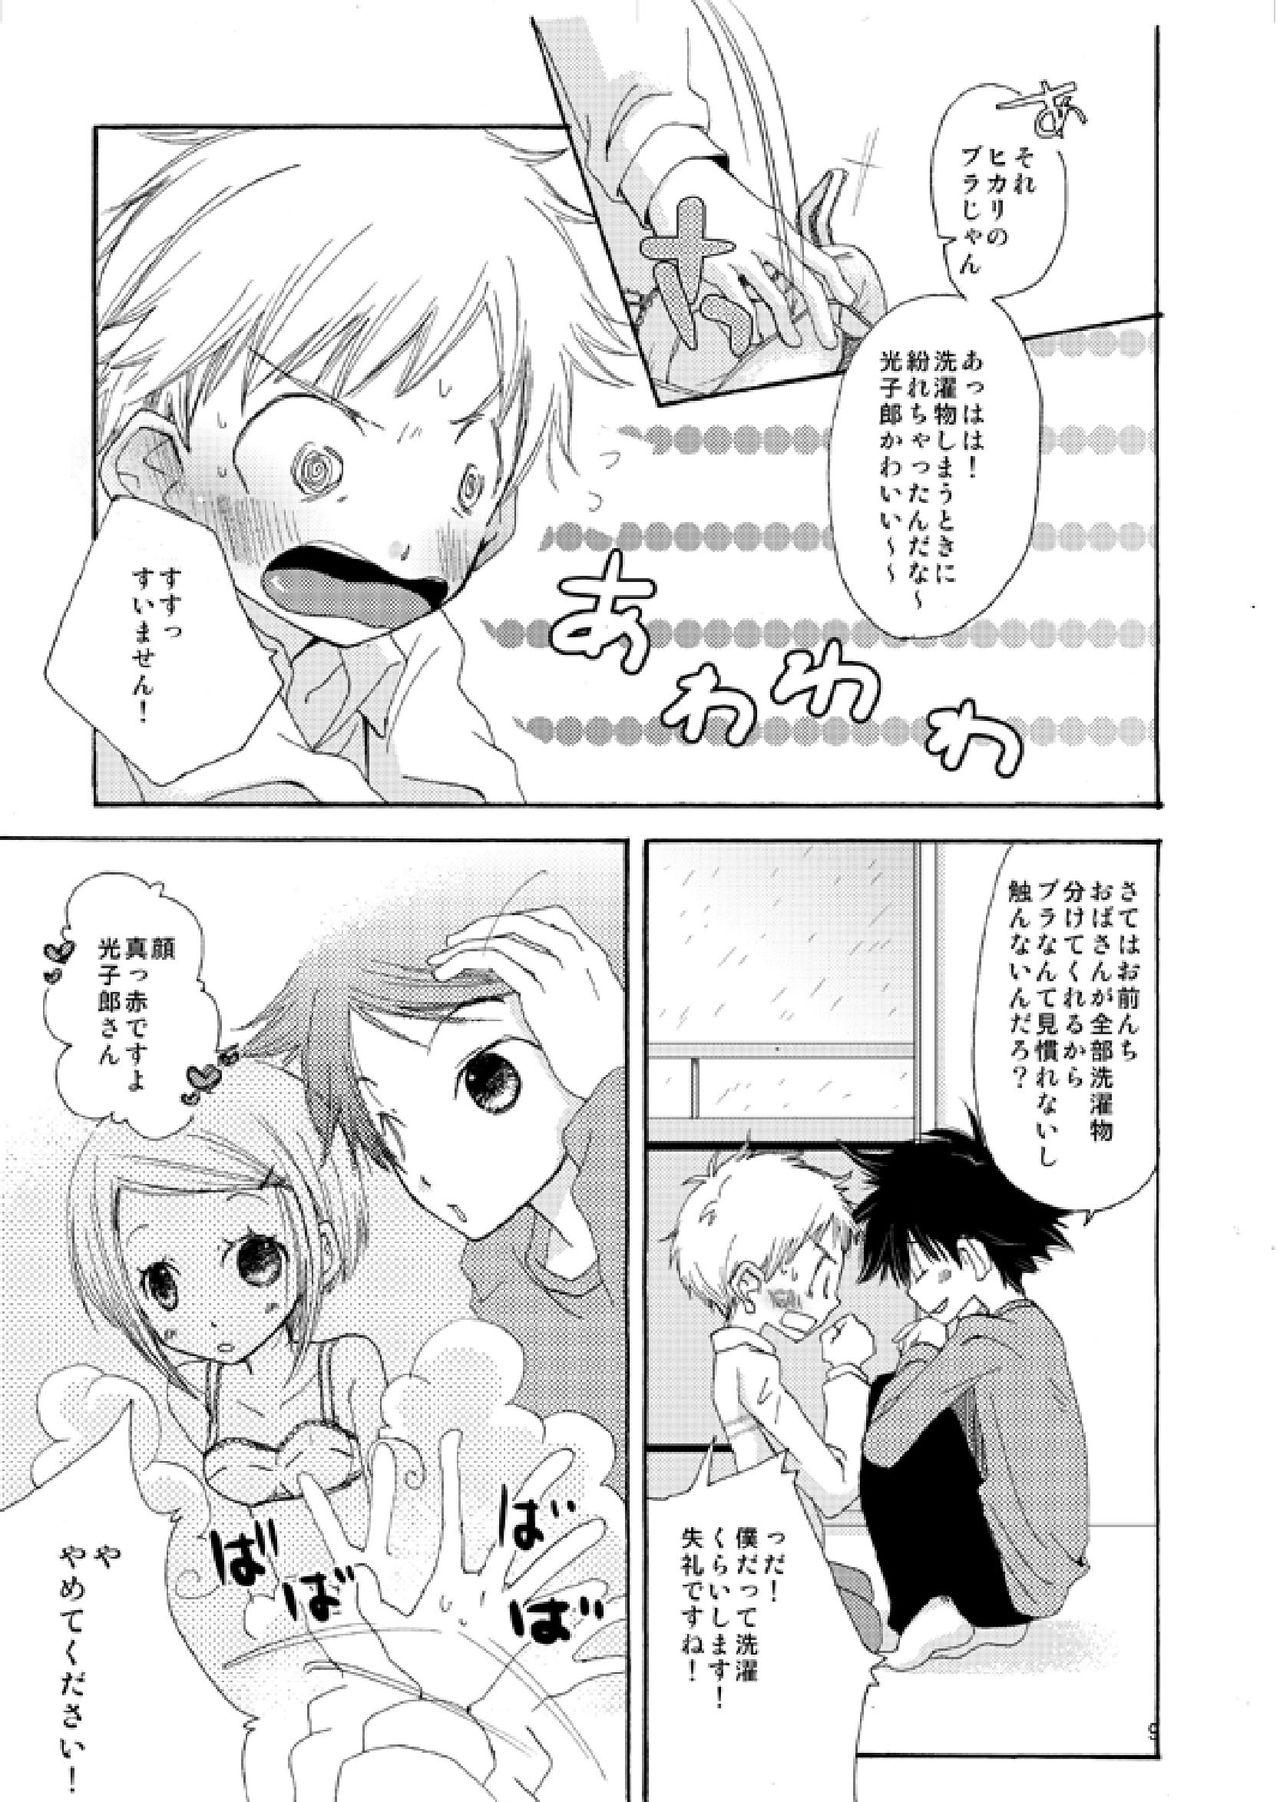 Deflowered @Cute - Digimon adventure 18yo - Page 8